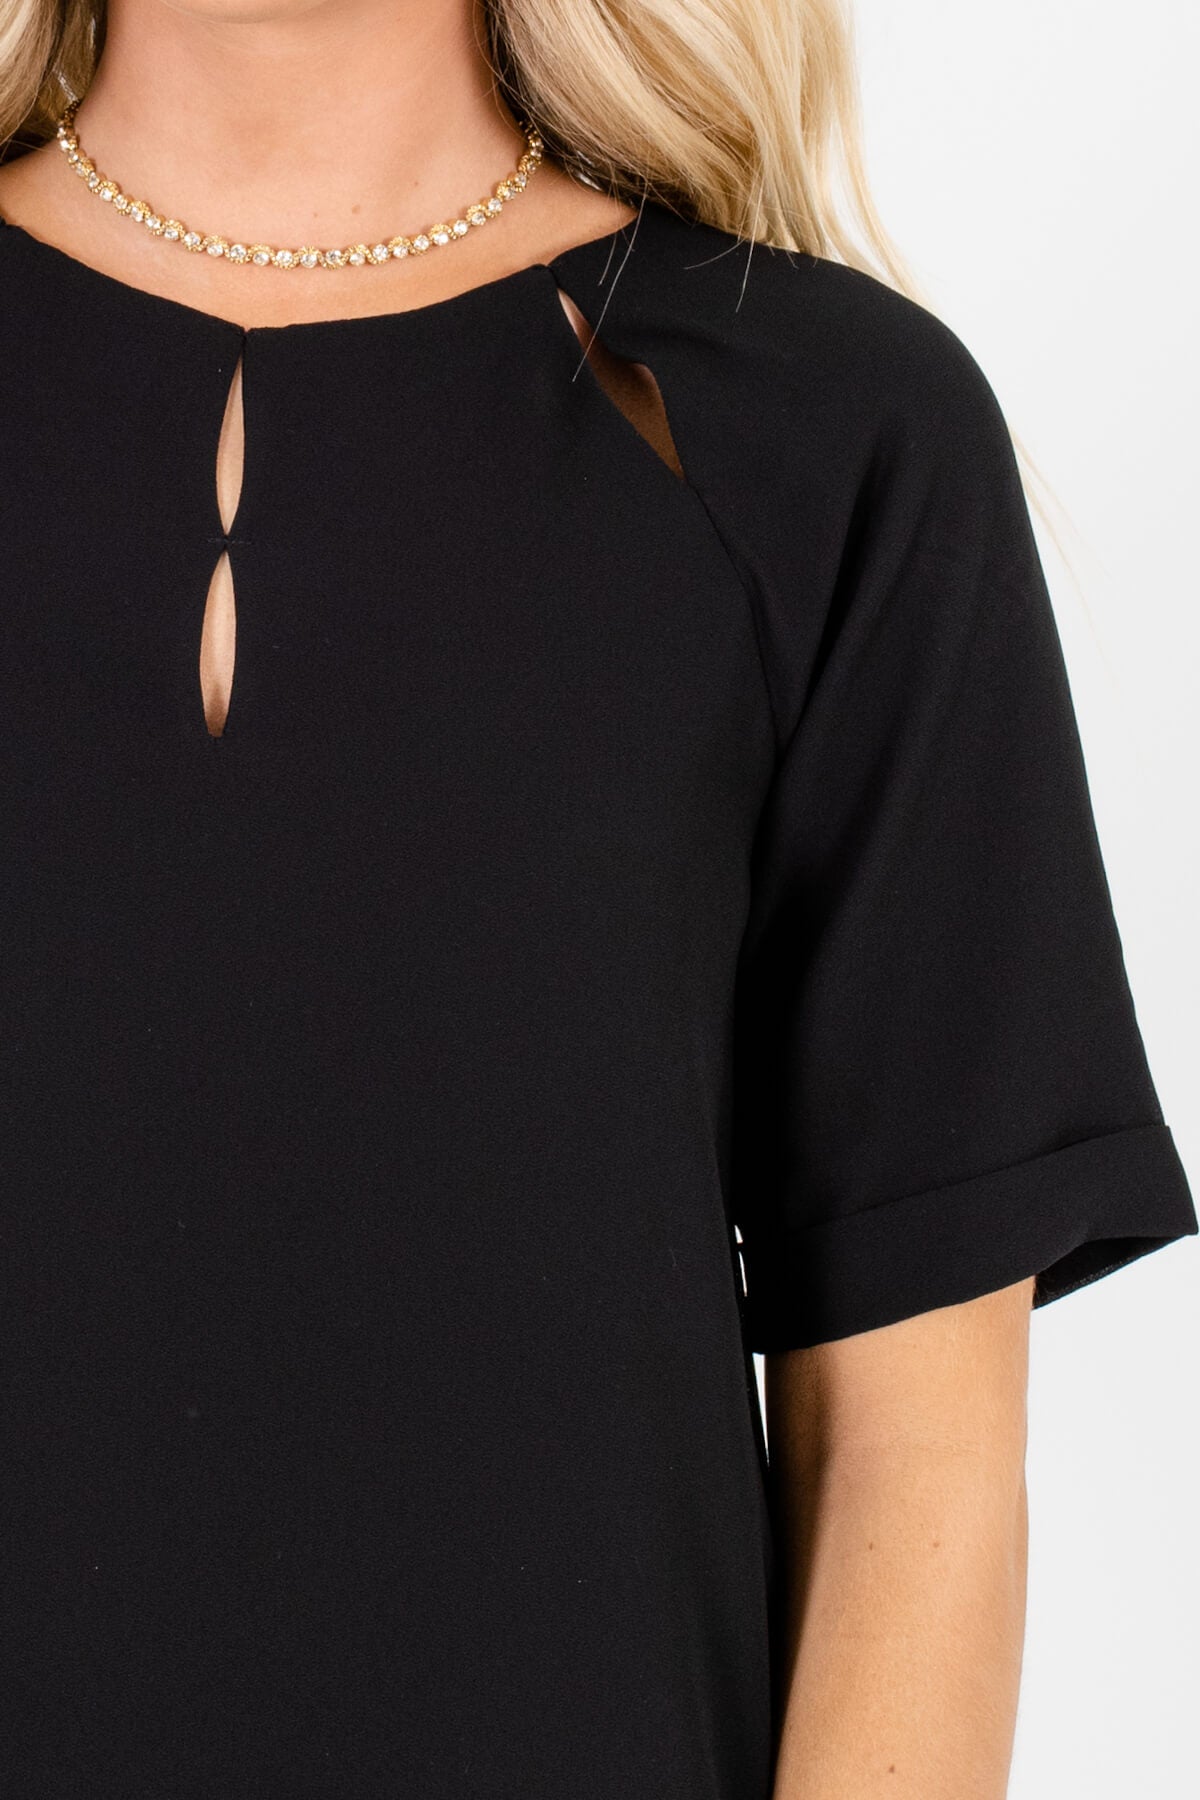 Black Affordable Online Boutique Clothing for Women